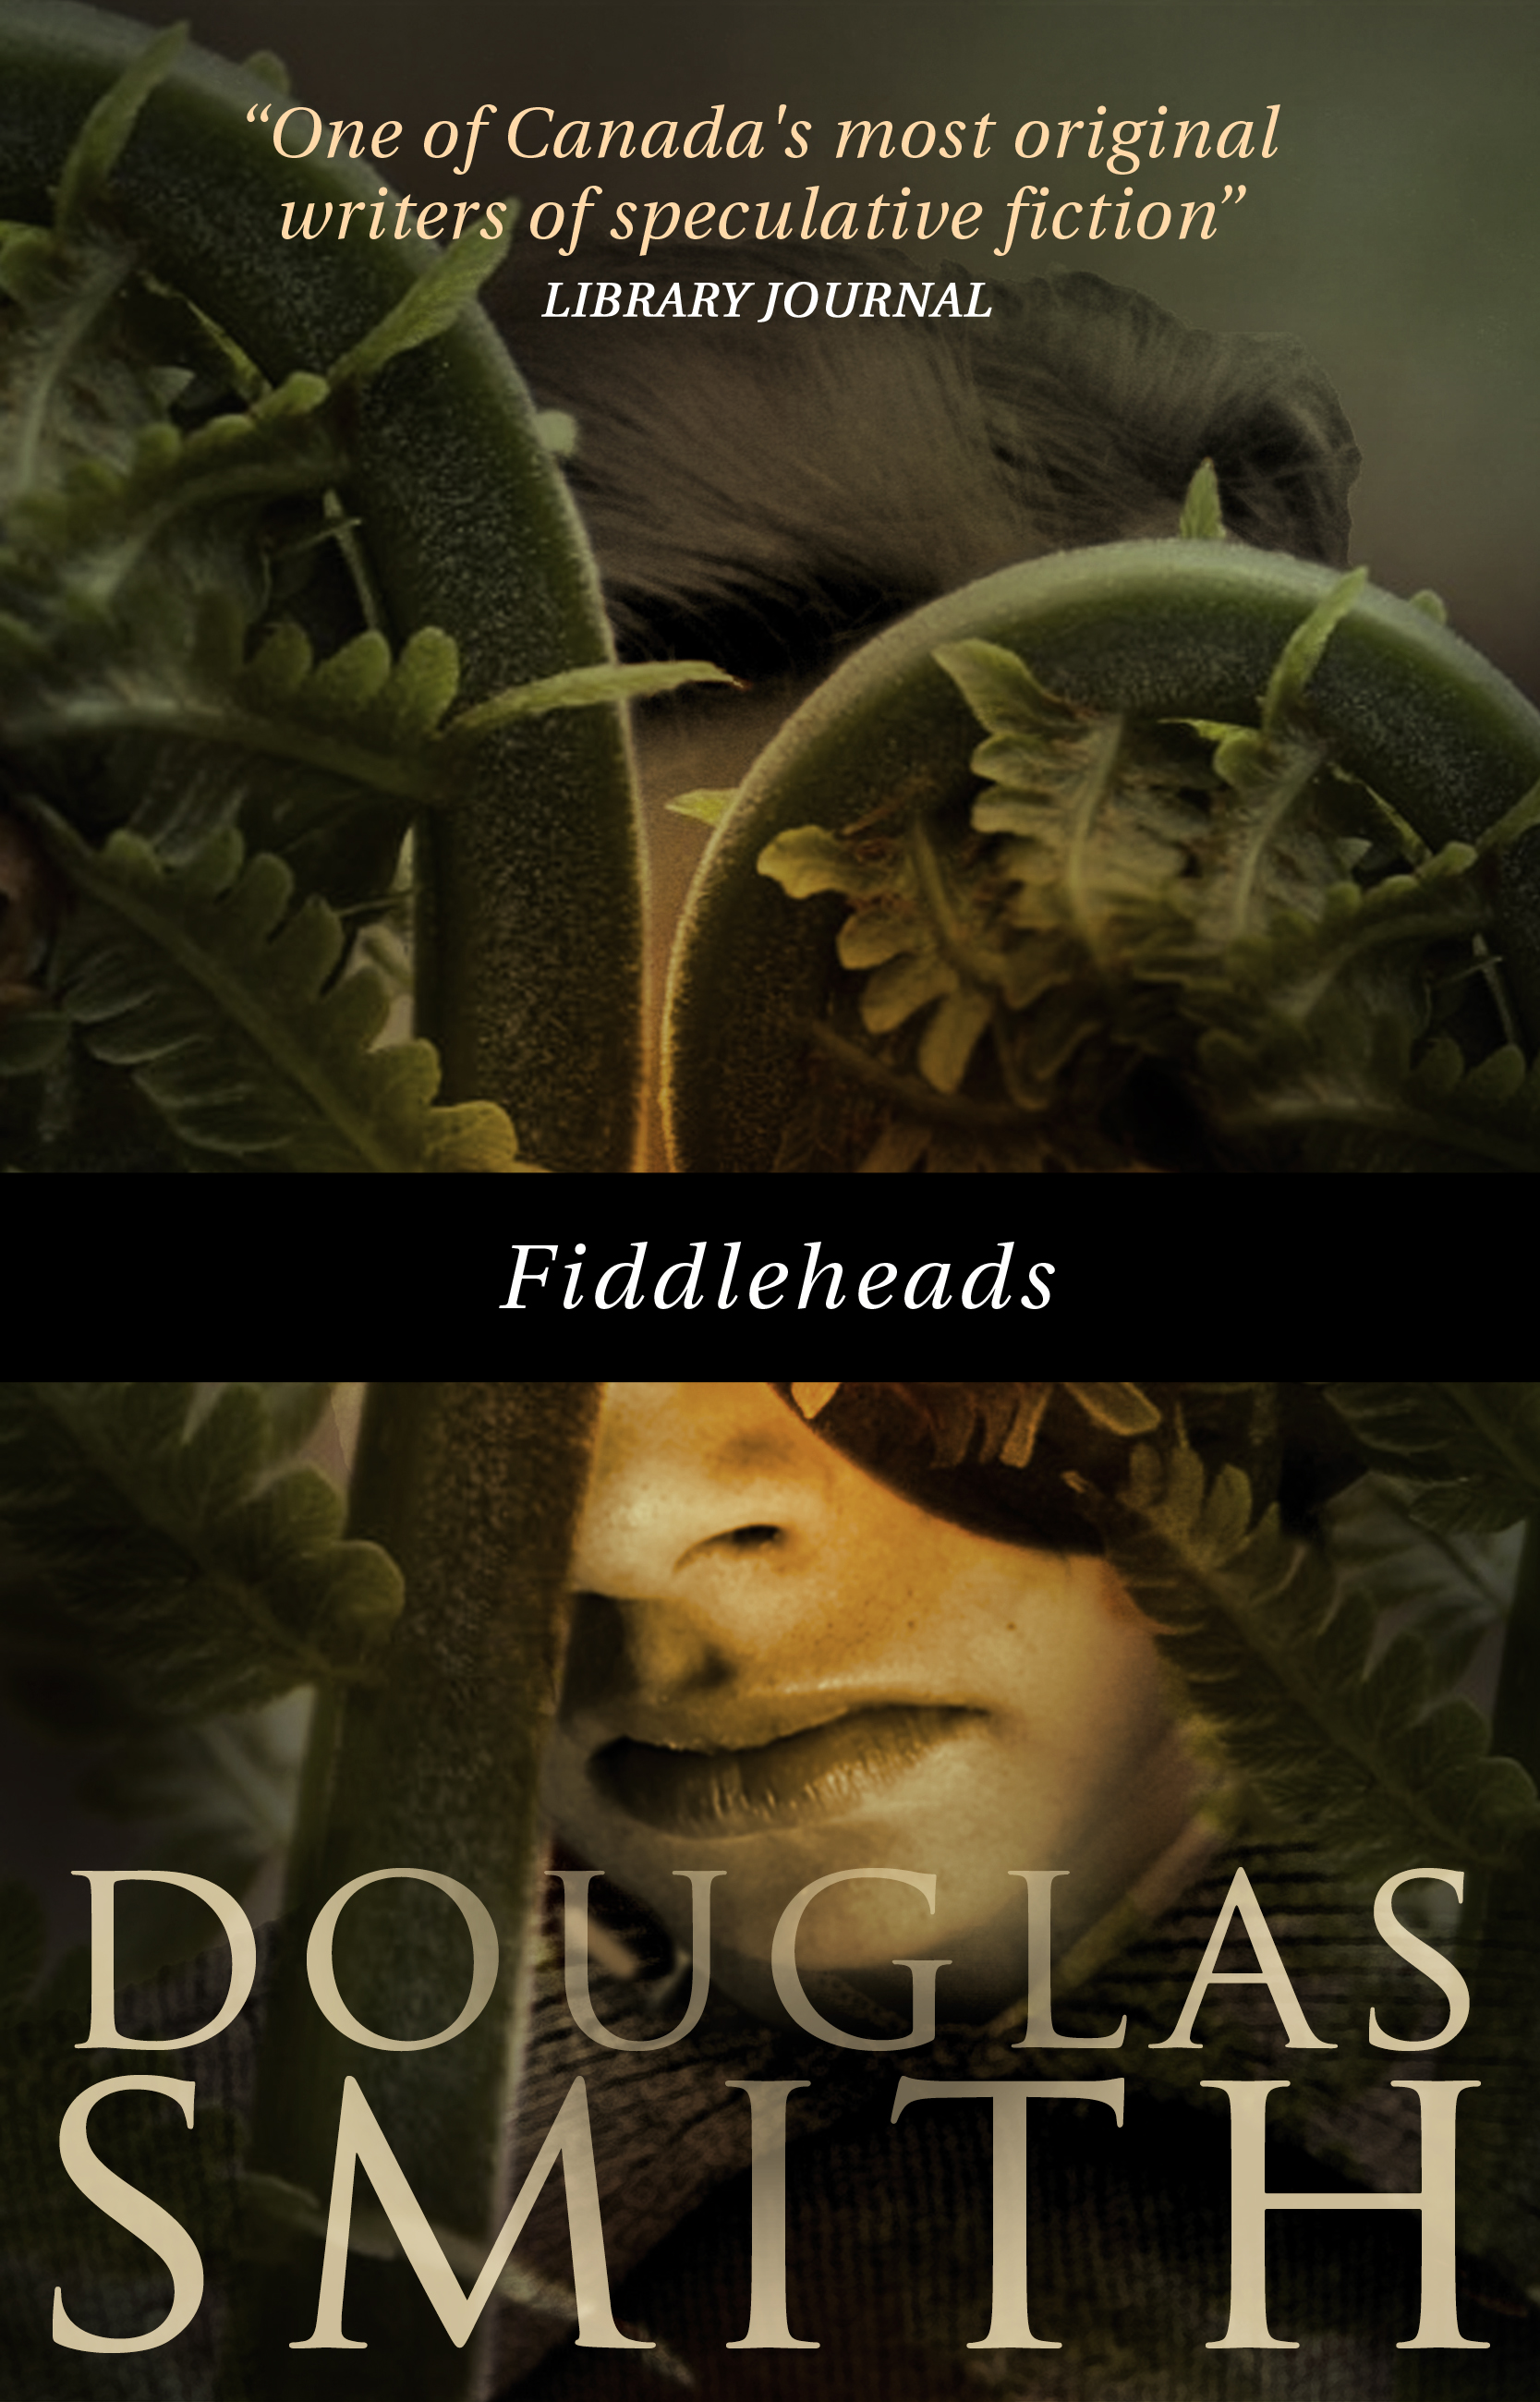 Fiddleheads